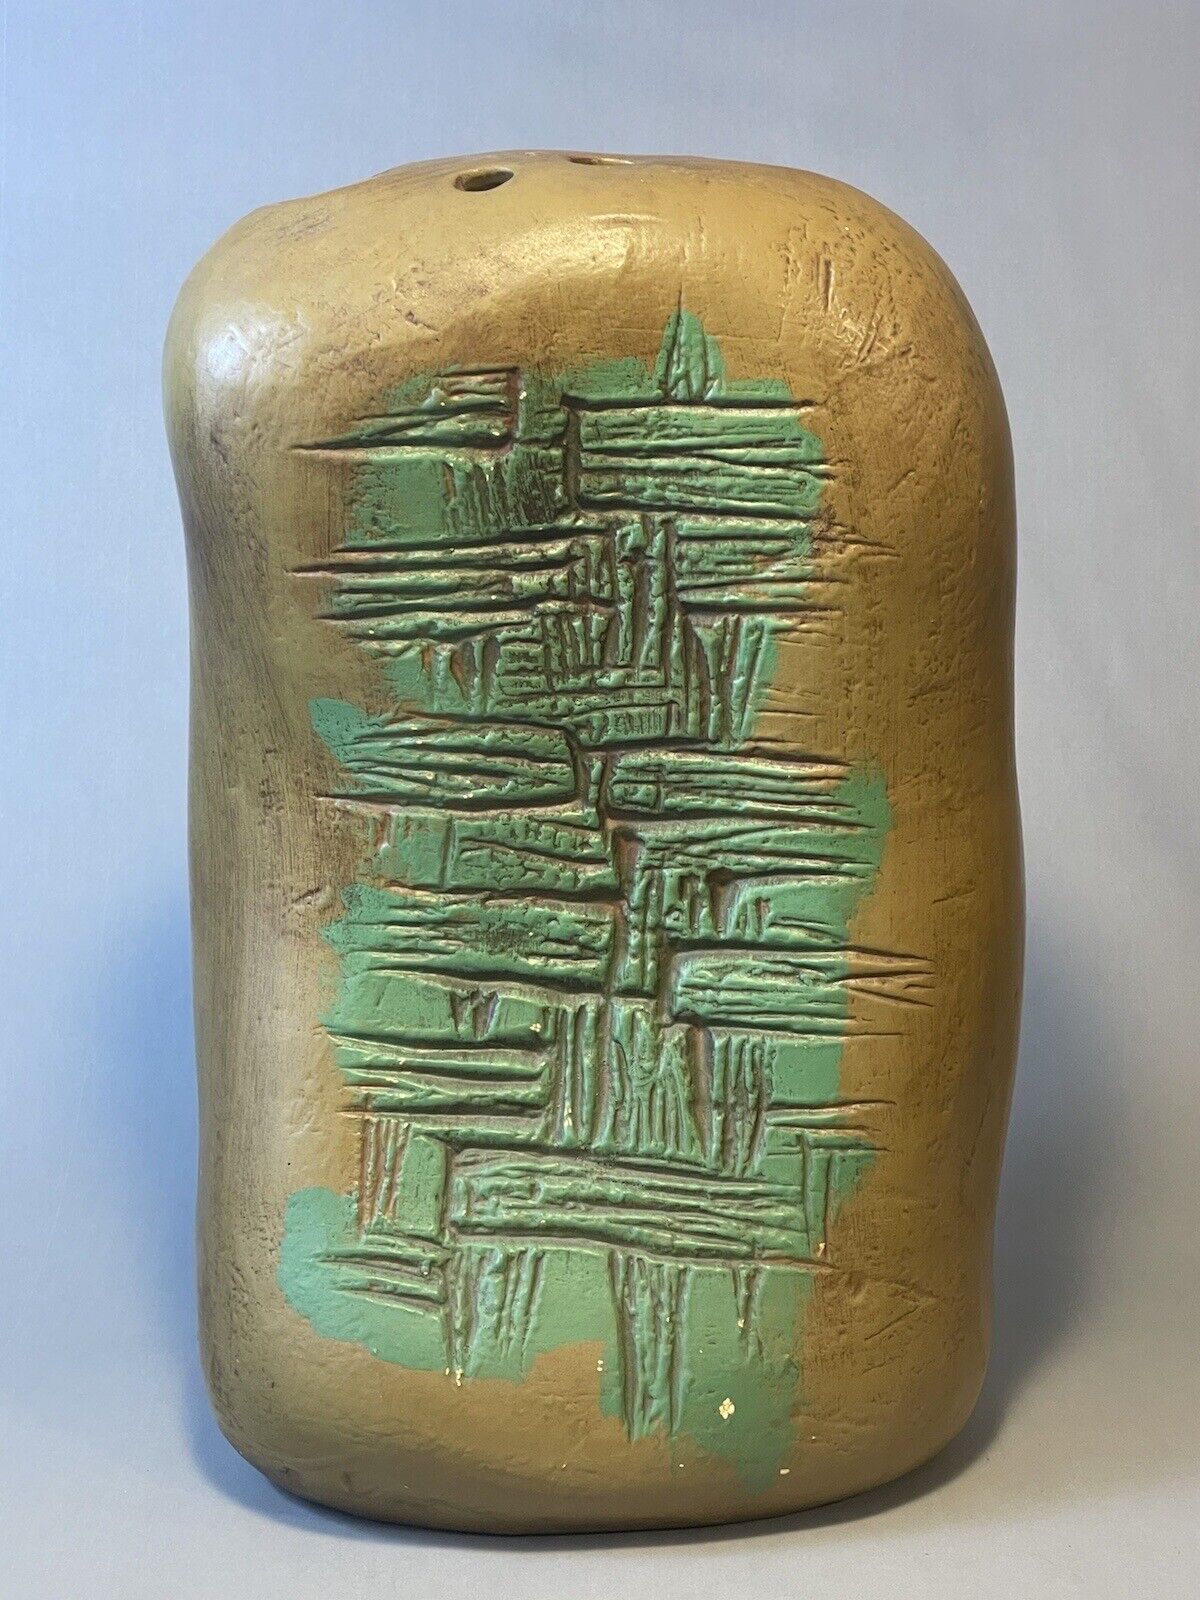 UGLY Large Retro Ceramic Vase (Nicknamed “The Potato”)